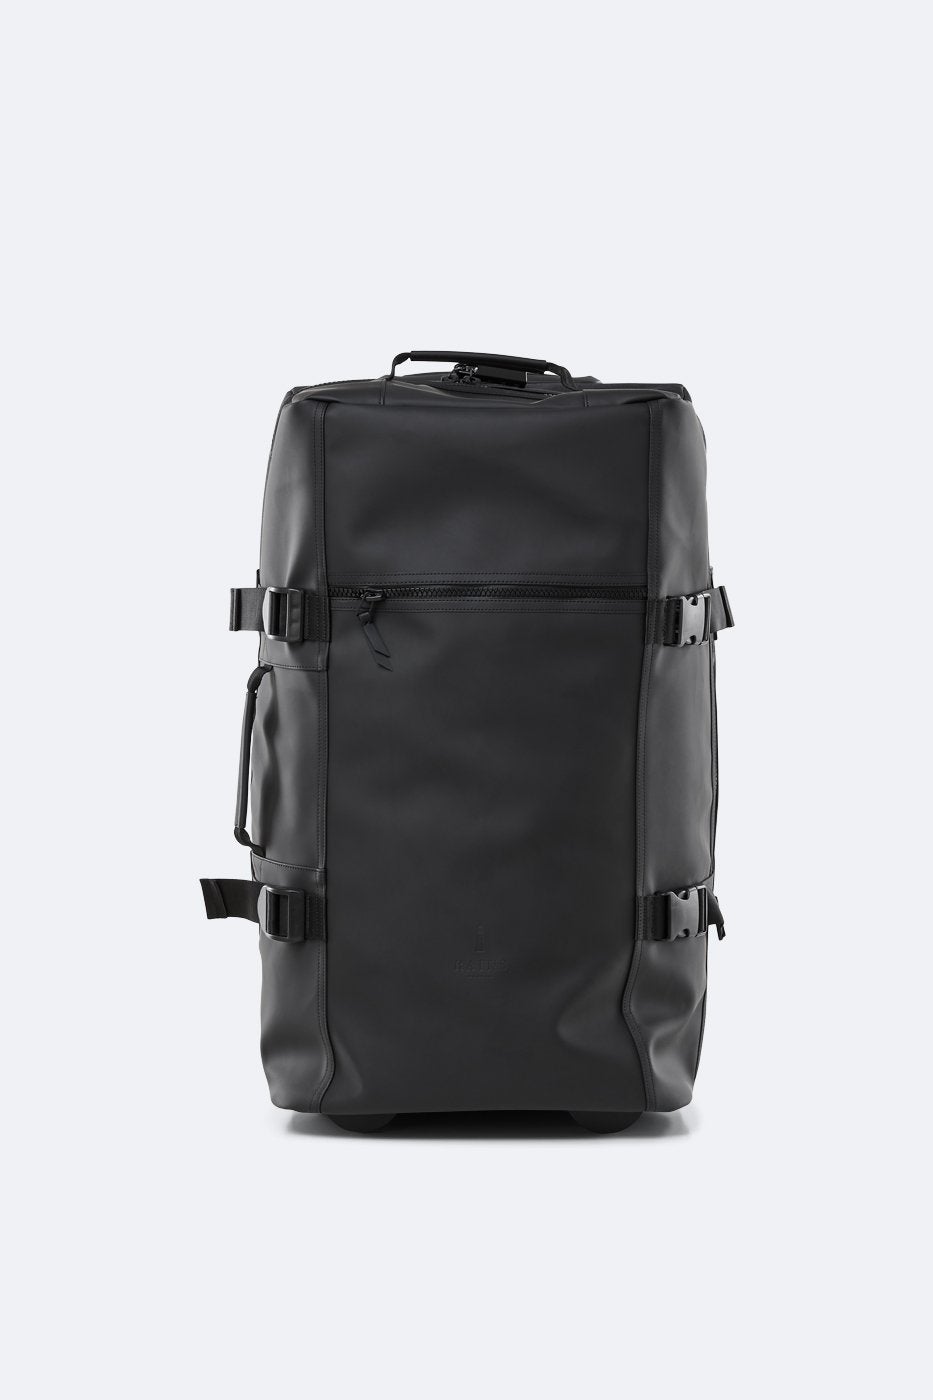 Travel Bag Large - Black